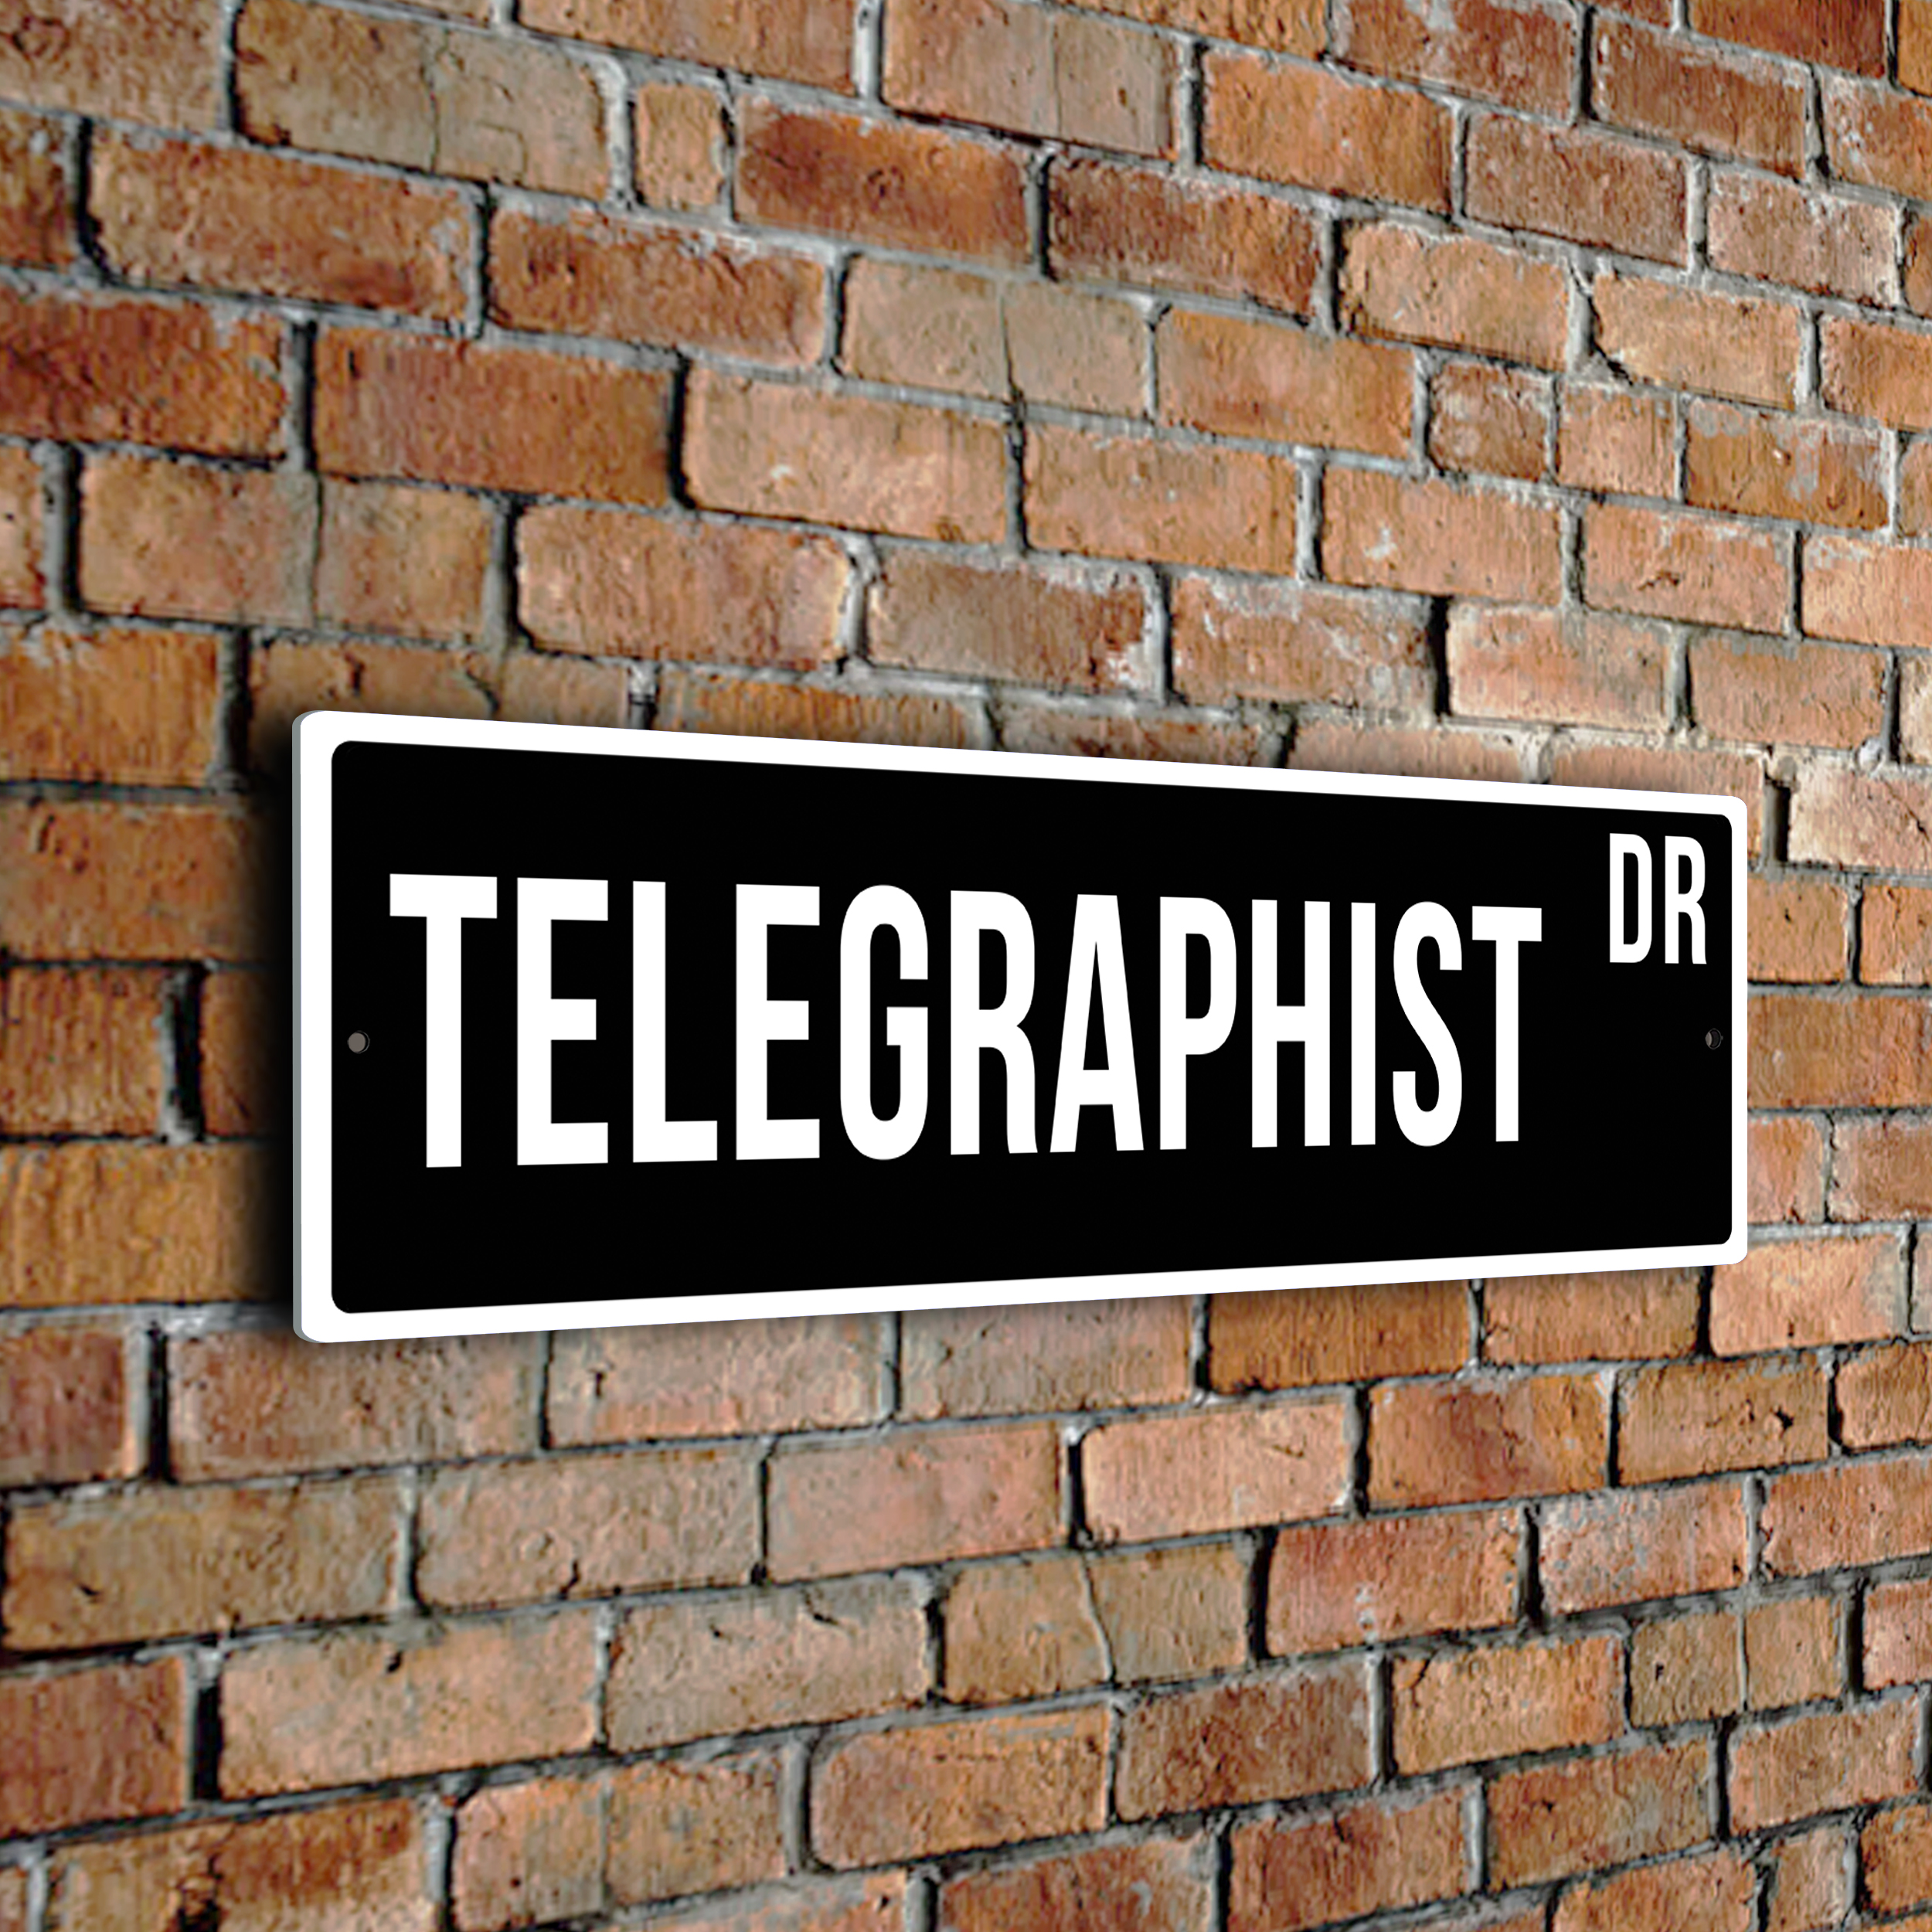 Telegraphist street sign